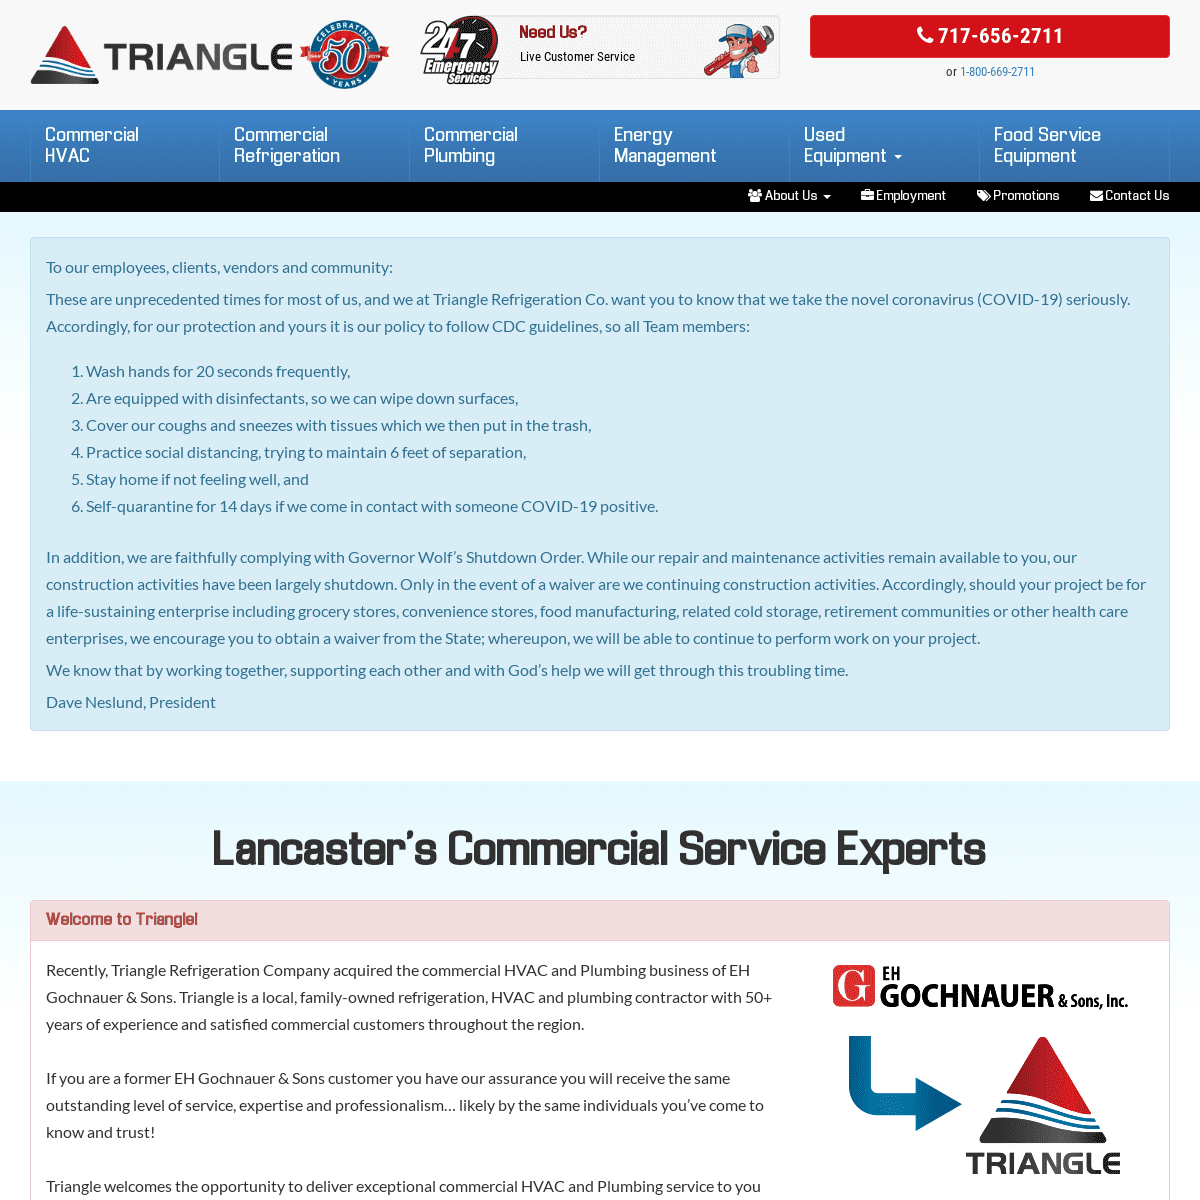 A complete backup of trianglerefrigeration.com